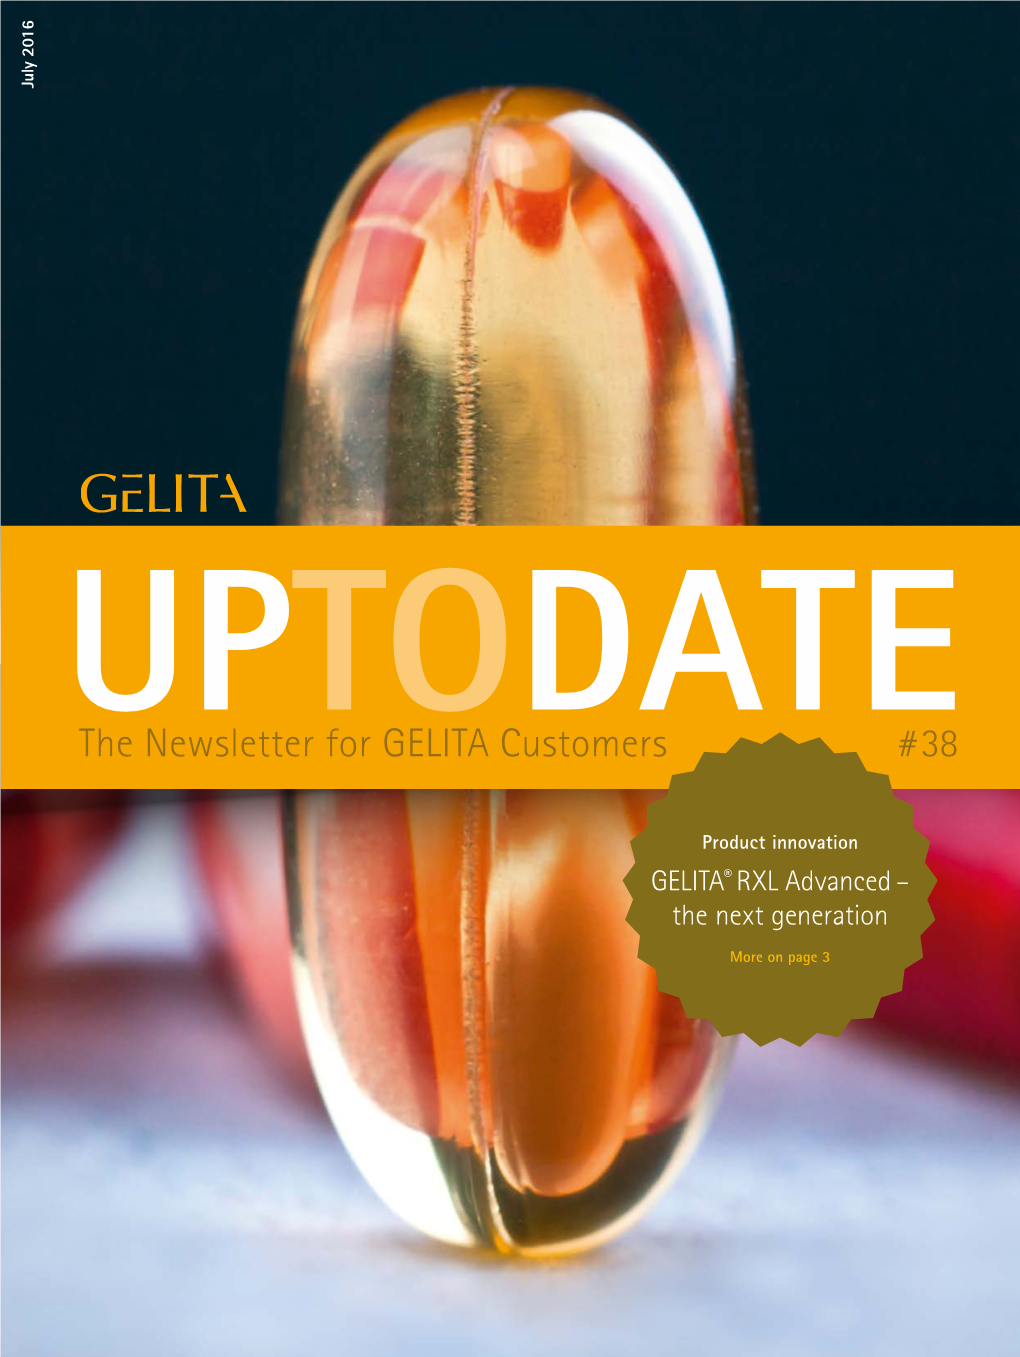 The Newsletter for GELITA Customers #38